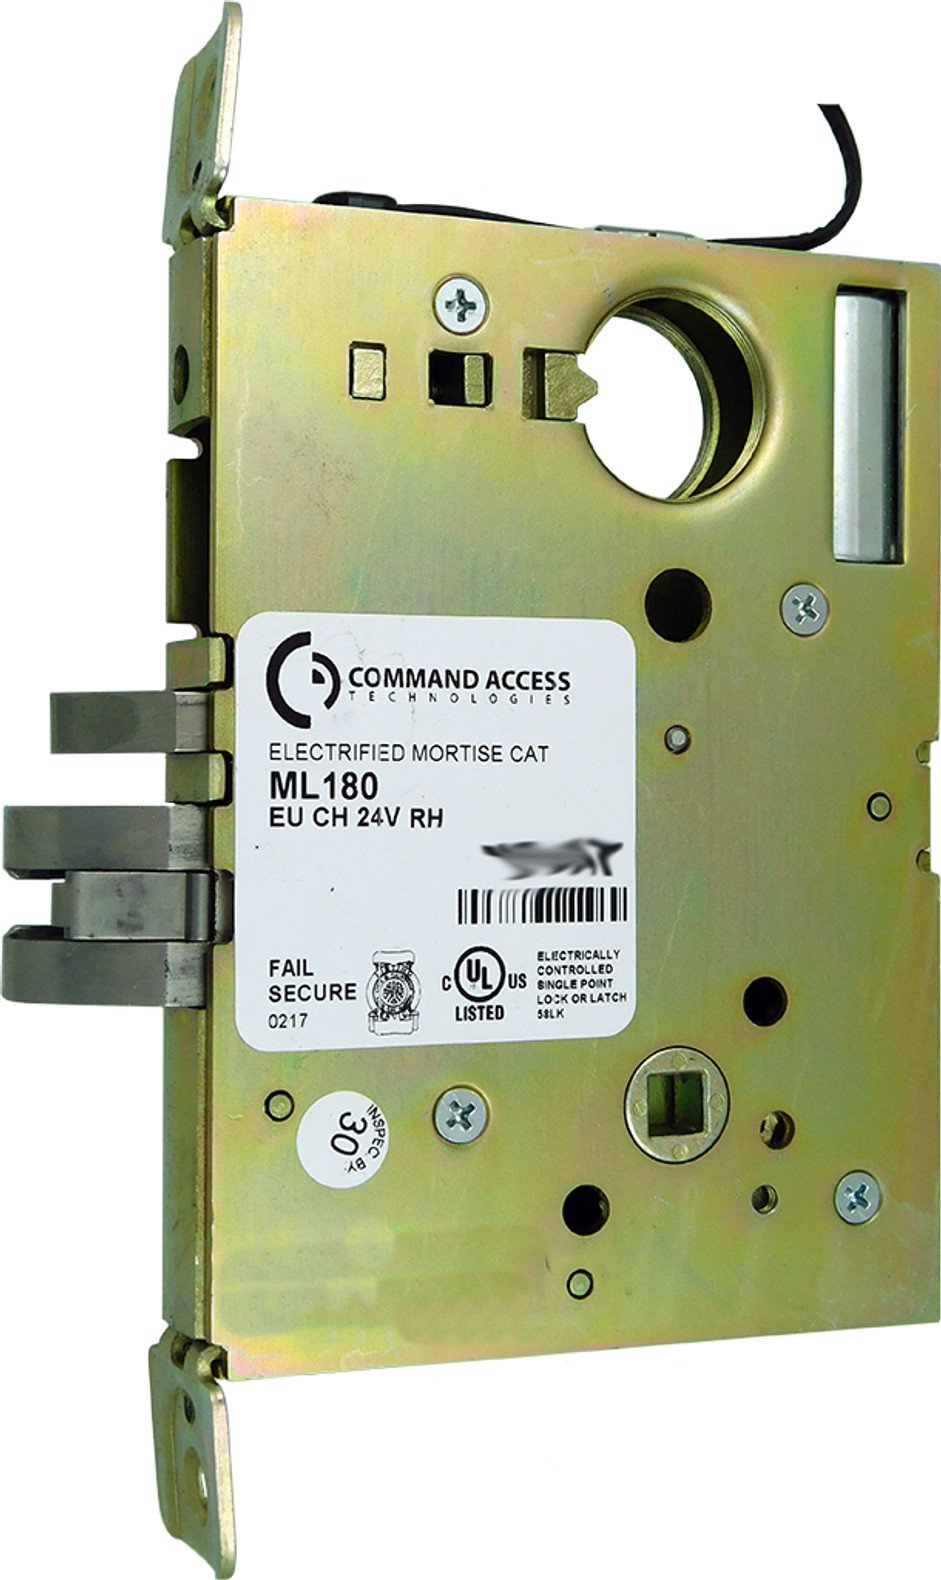 Schlage Mortise Lock Series L9000